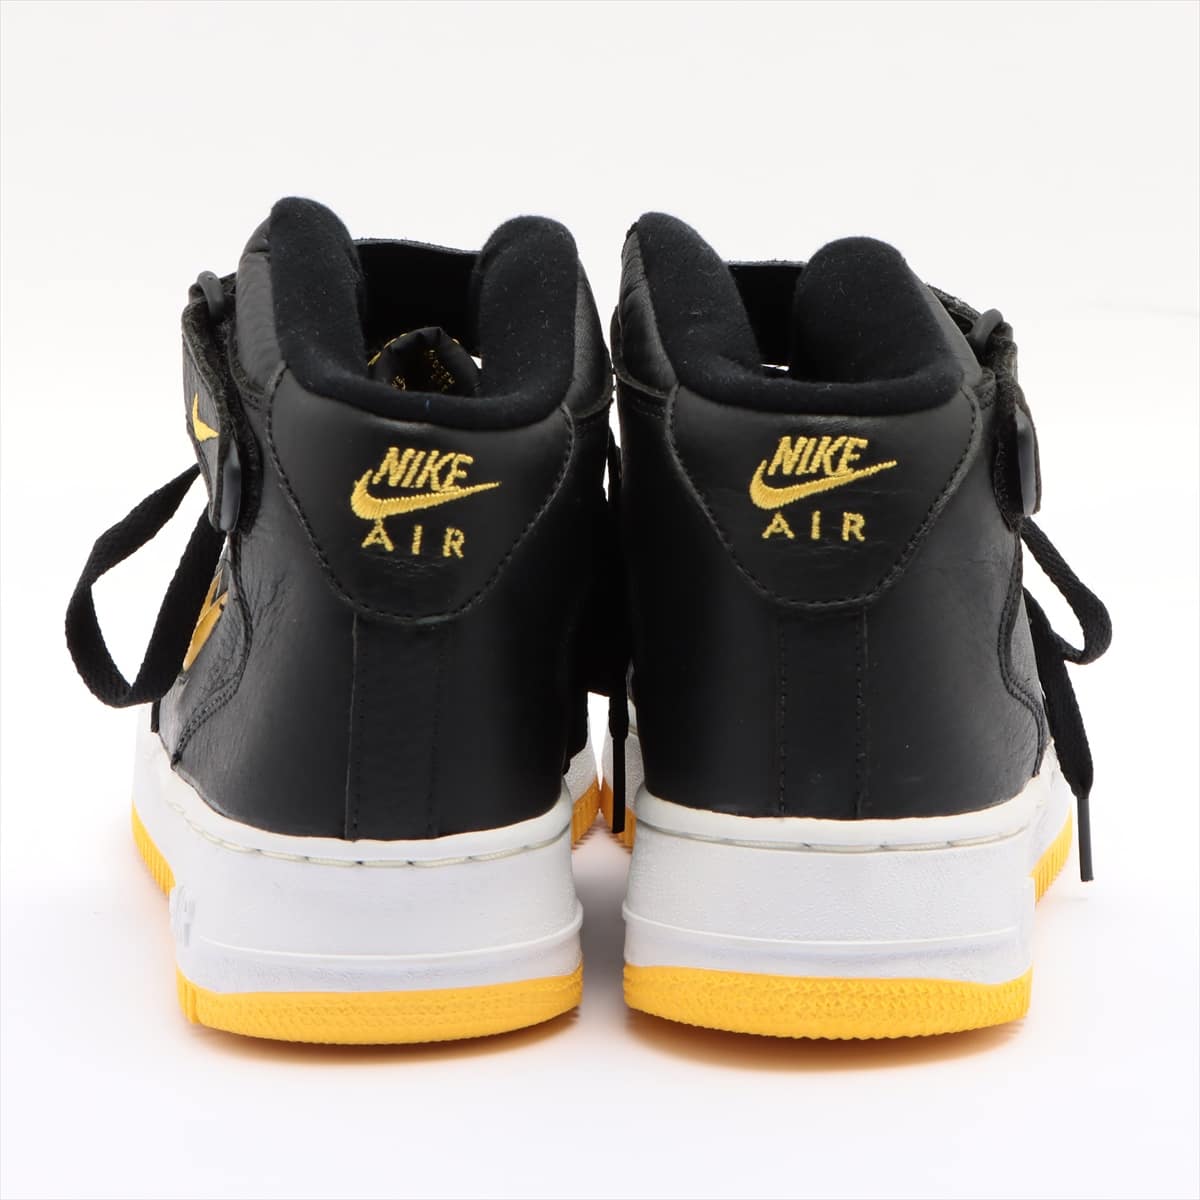 Nike AIR FORCE 1 MID Leather Sneakers 26.5cm Men's Black